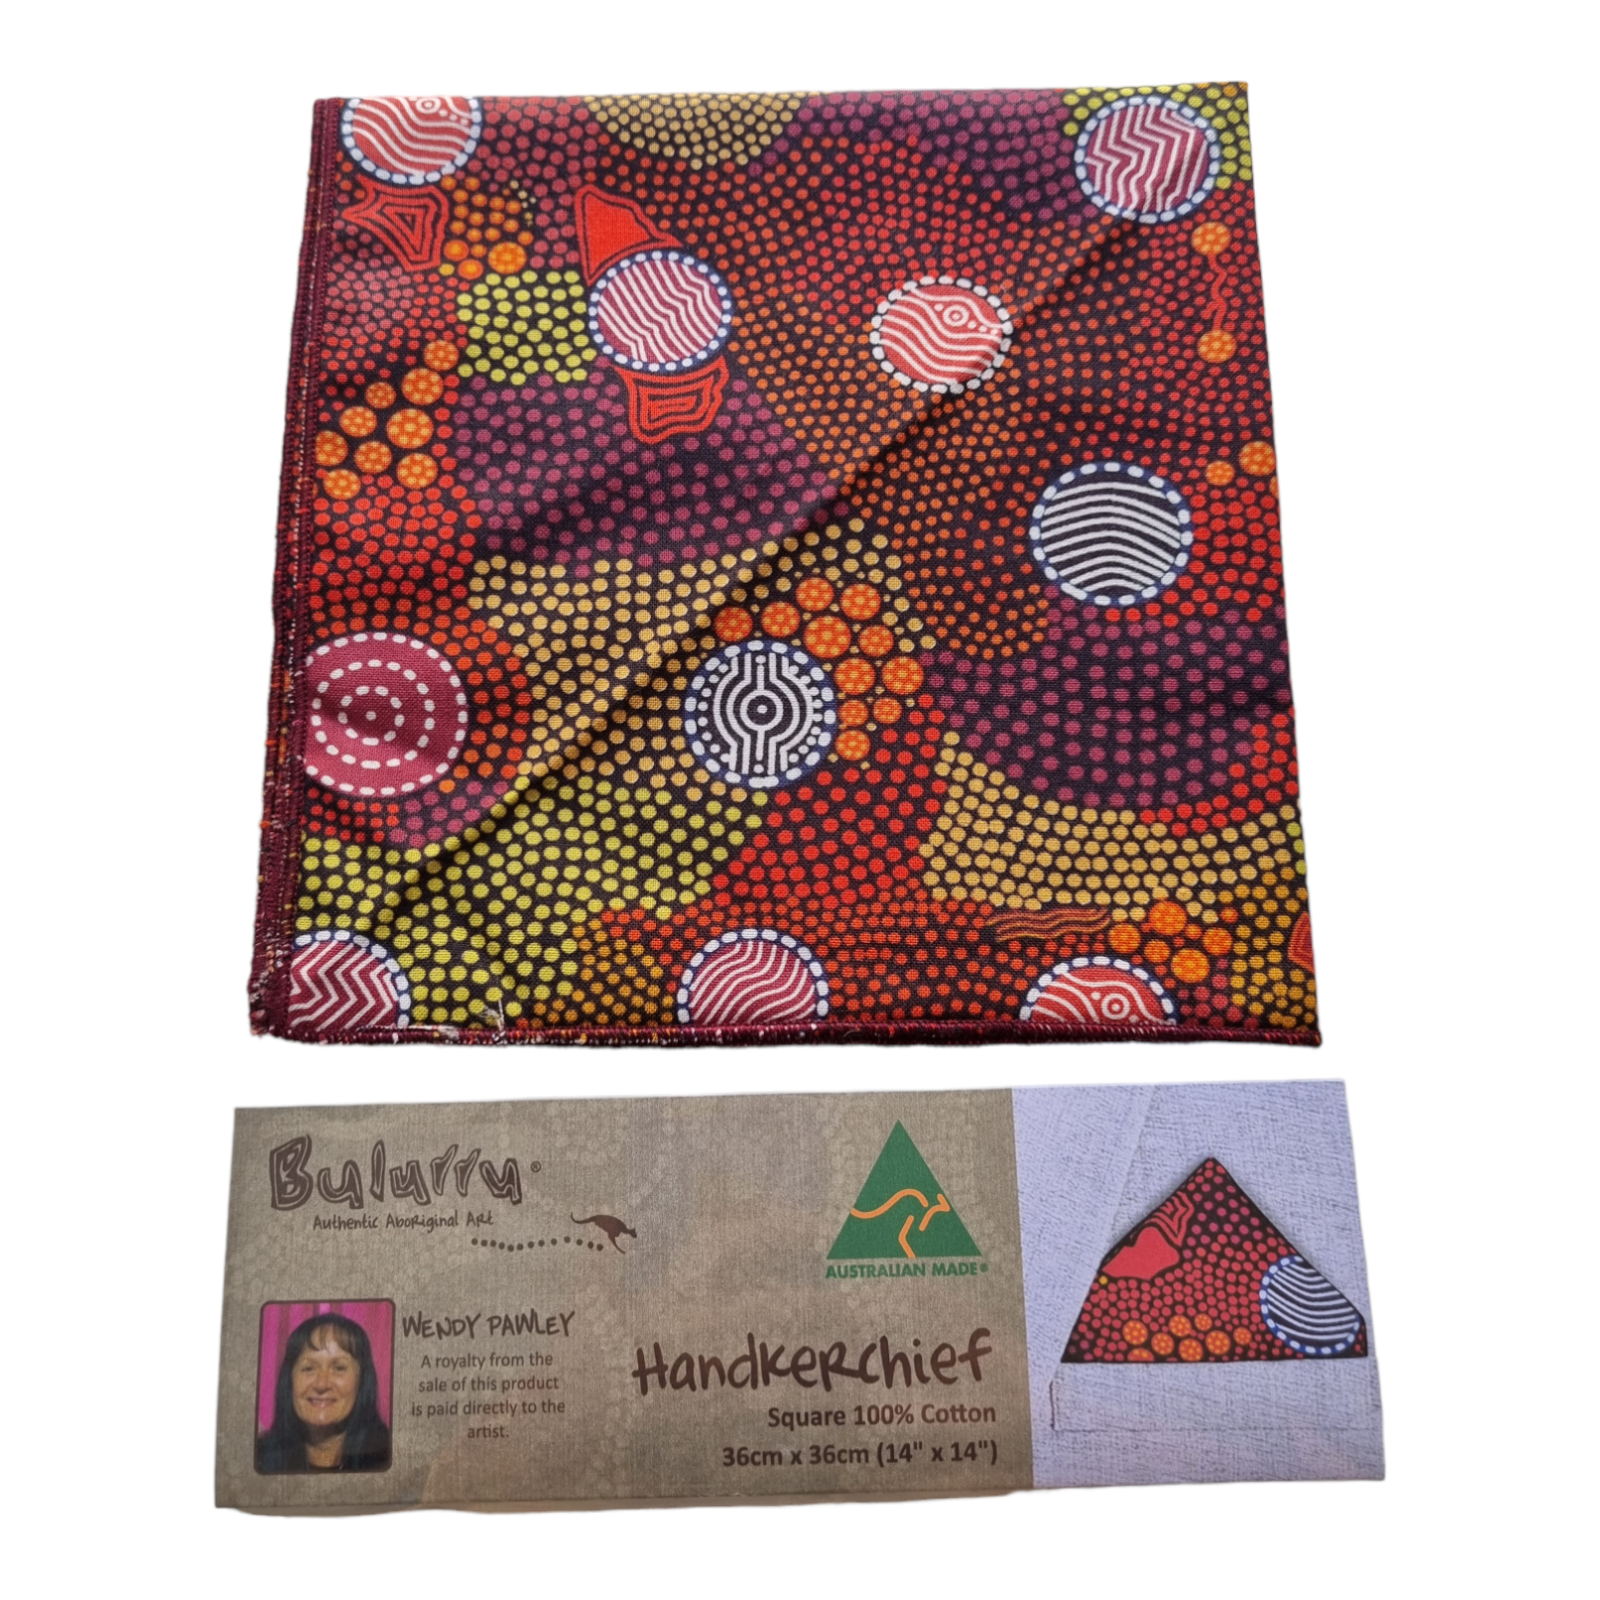 Aboriginal Handkerchief indigenous Art Cotton Hanky Pocket Upper Bullawa Park